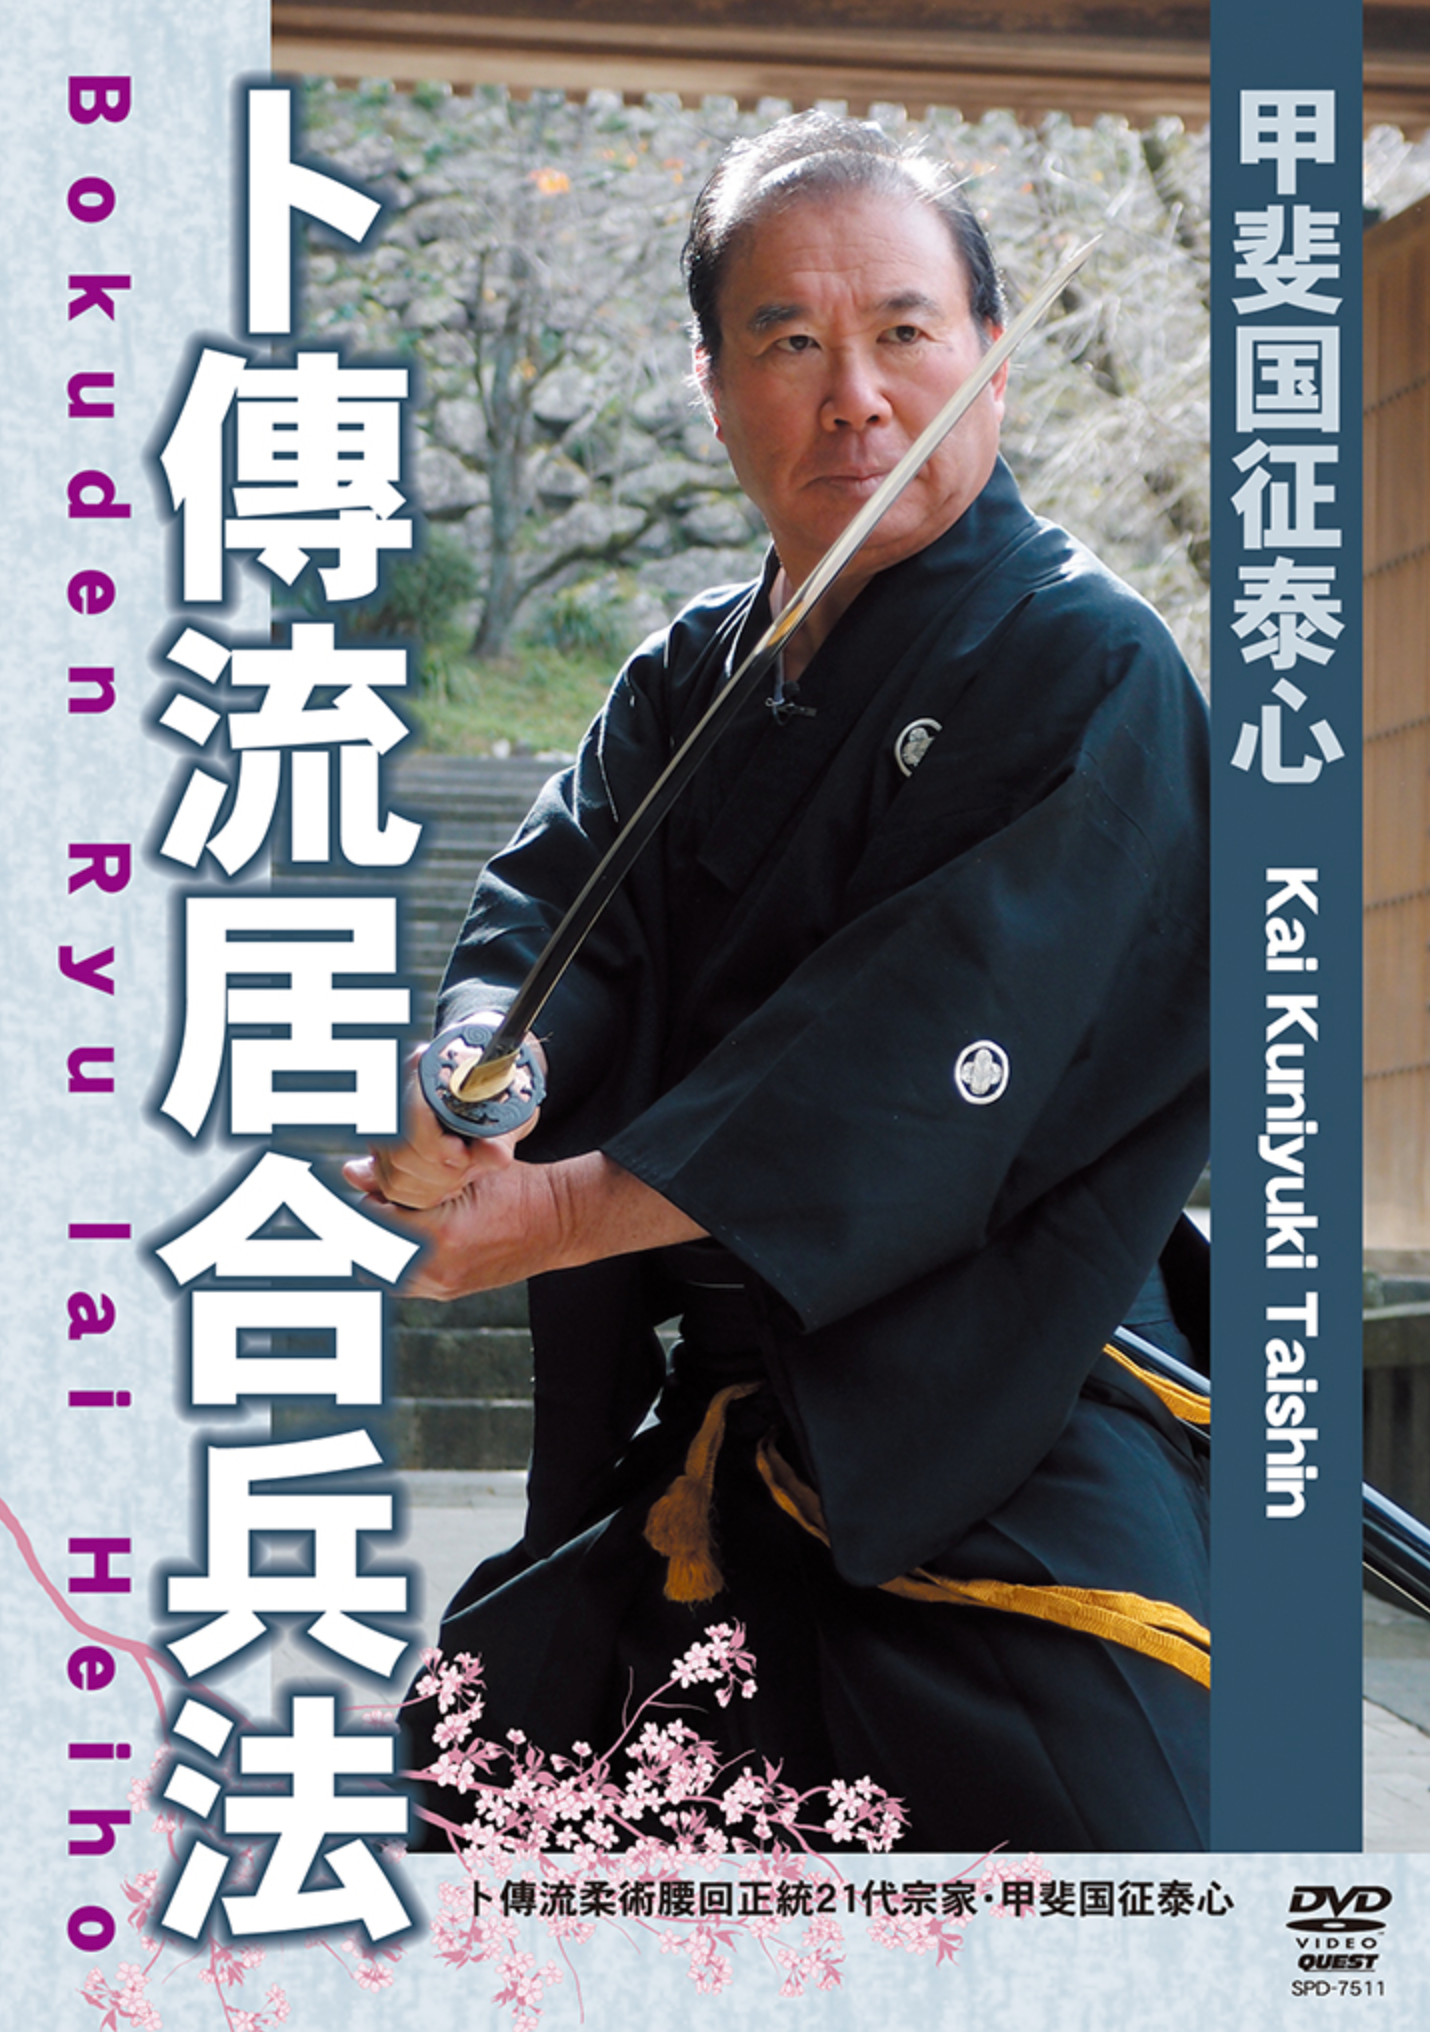 Bokuden Ryu Iai Heiho DVD with Kuniyuki Kai - Budovideos Inc